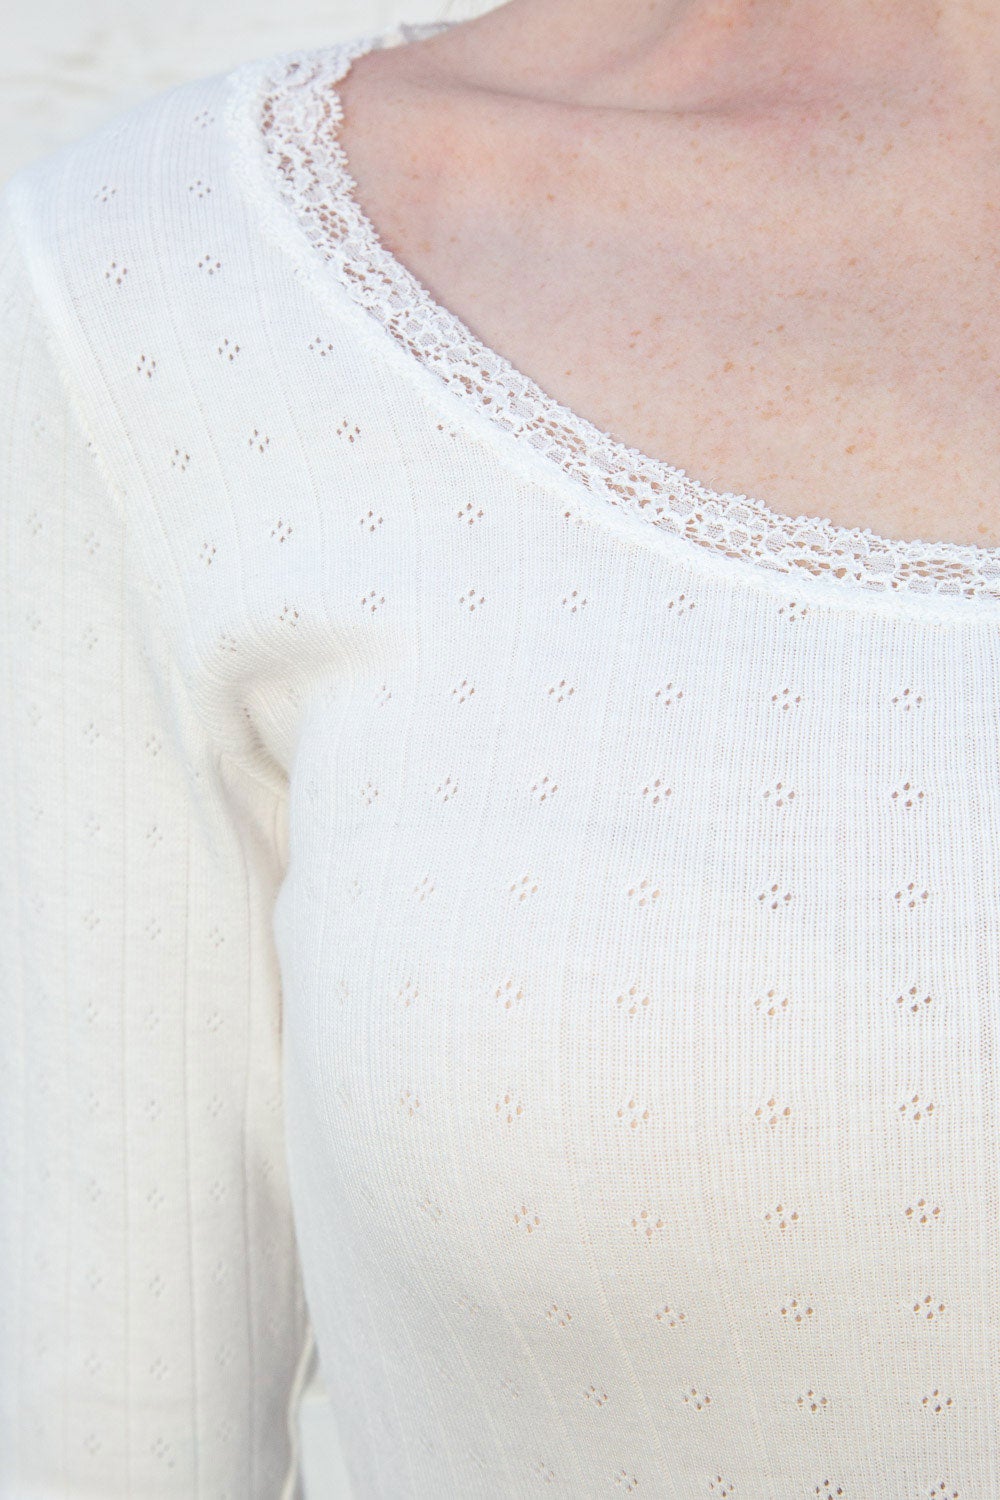 Brandy Melville - McKenna Ribbed Lace Top on Designer Wardrobe